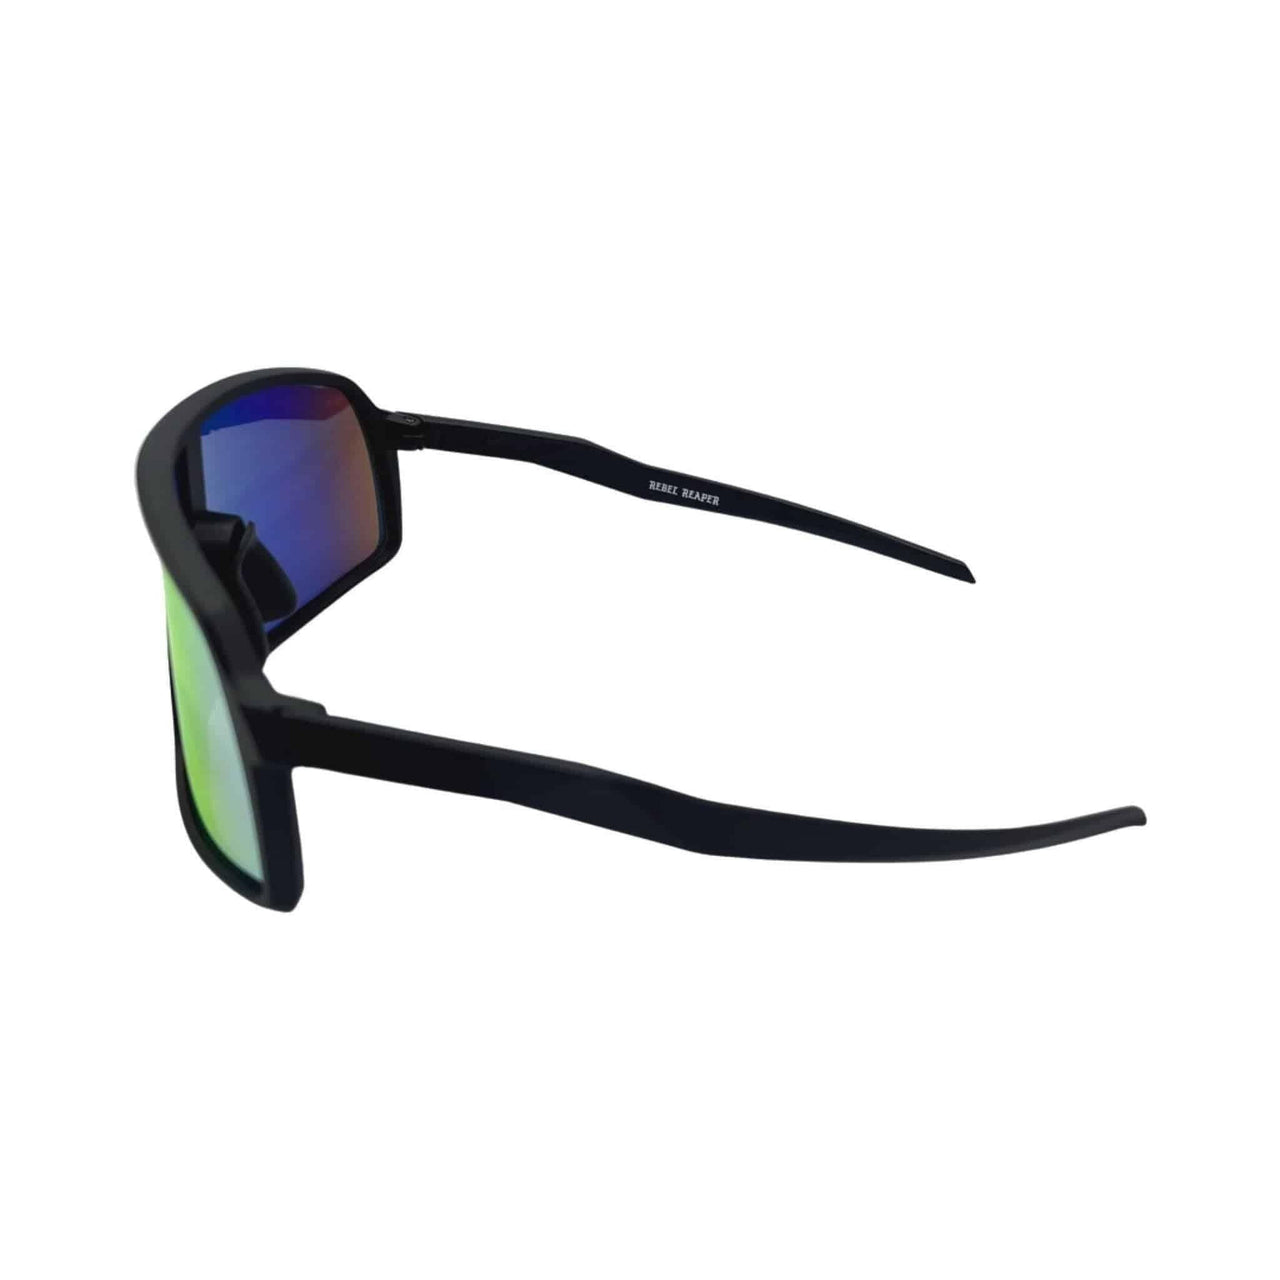 Yeti Red Mirror Polarized Lens Sunglasses